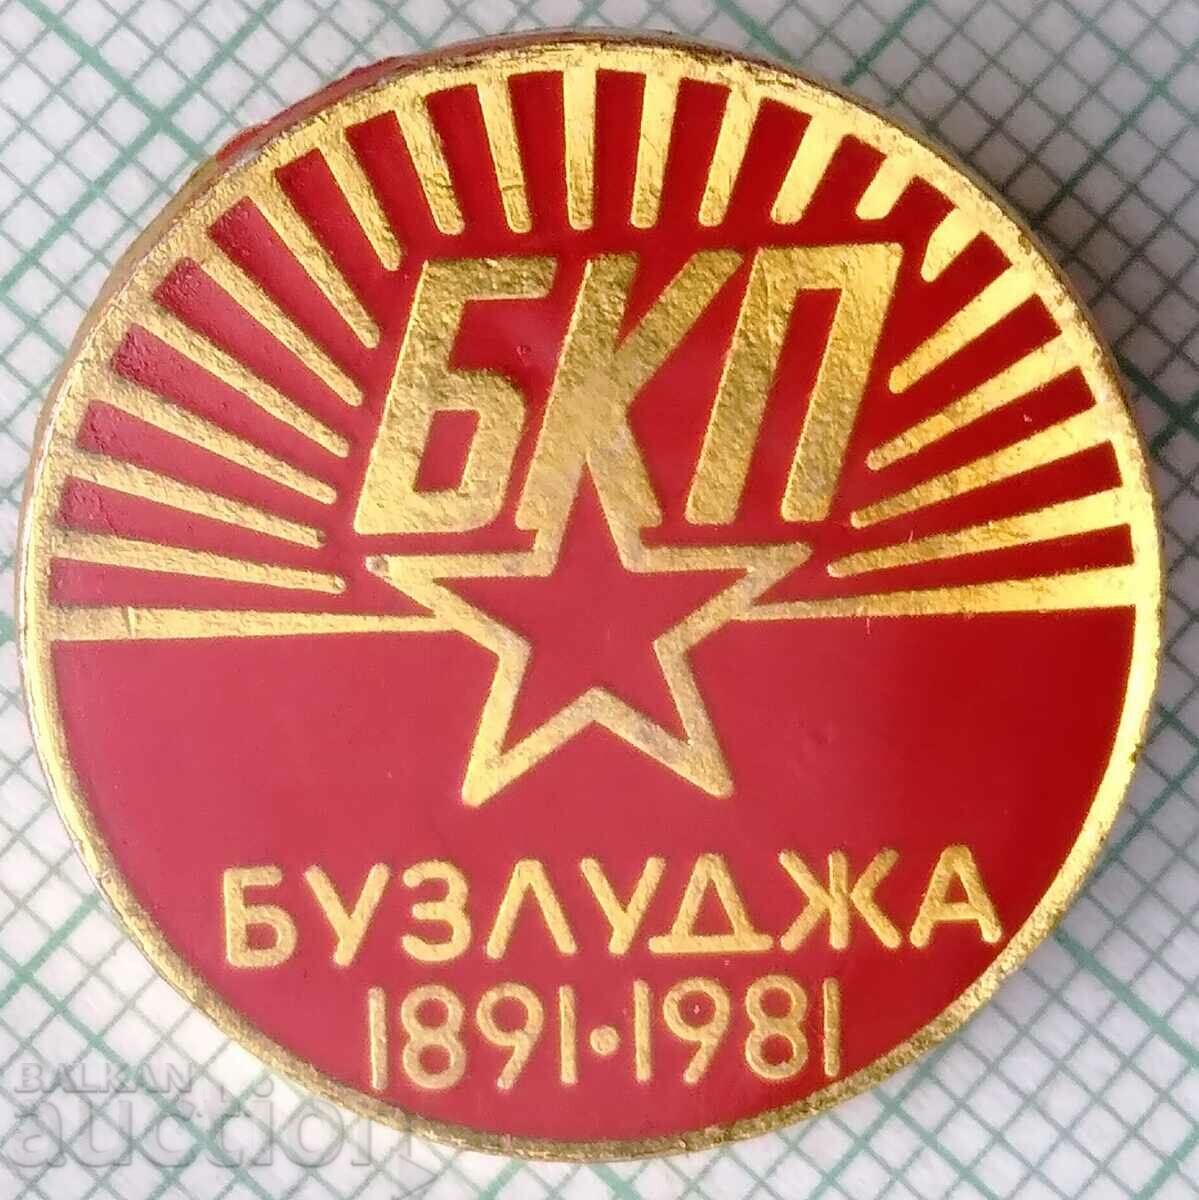 12731 Insigna - BKP Buzludzha 1891-1981